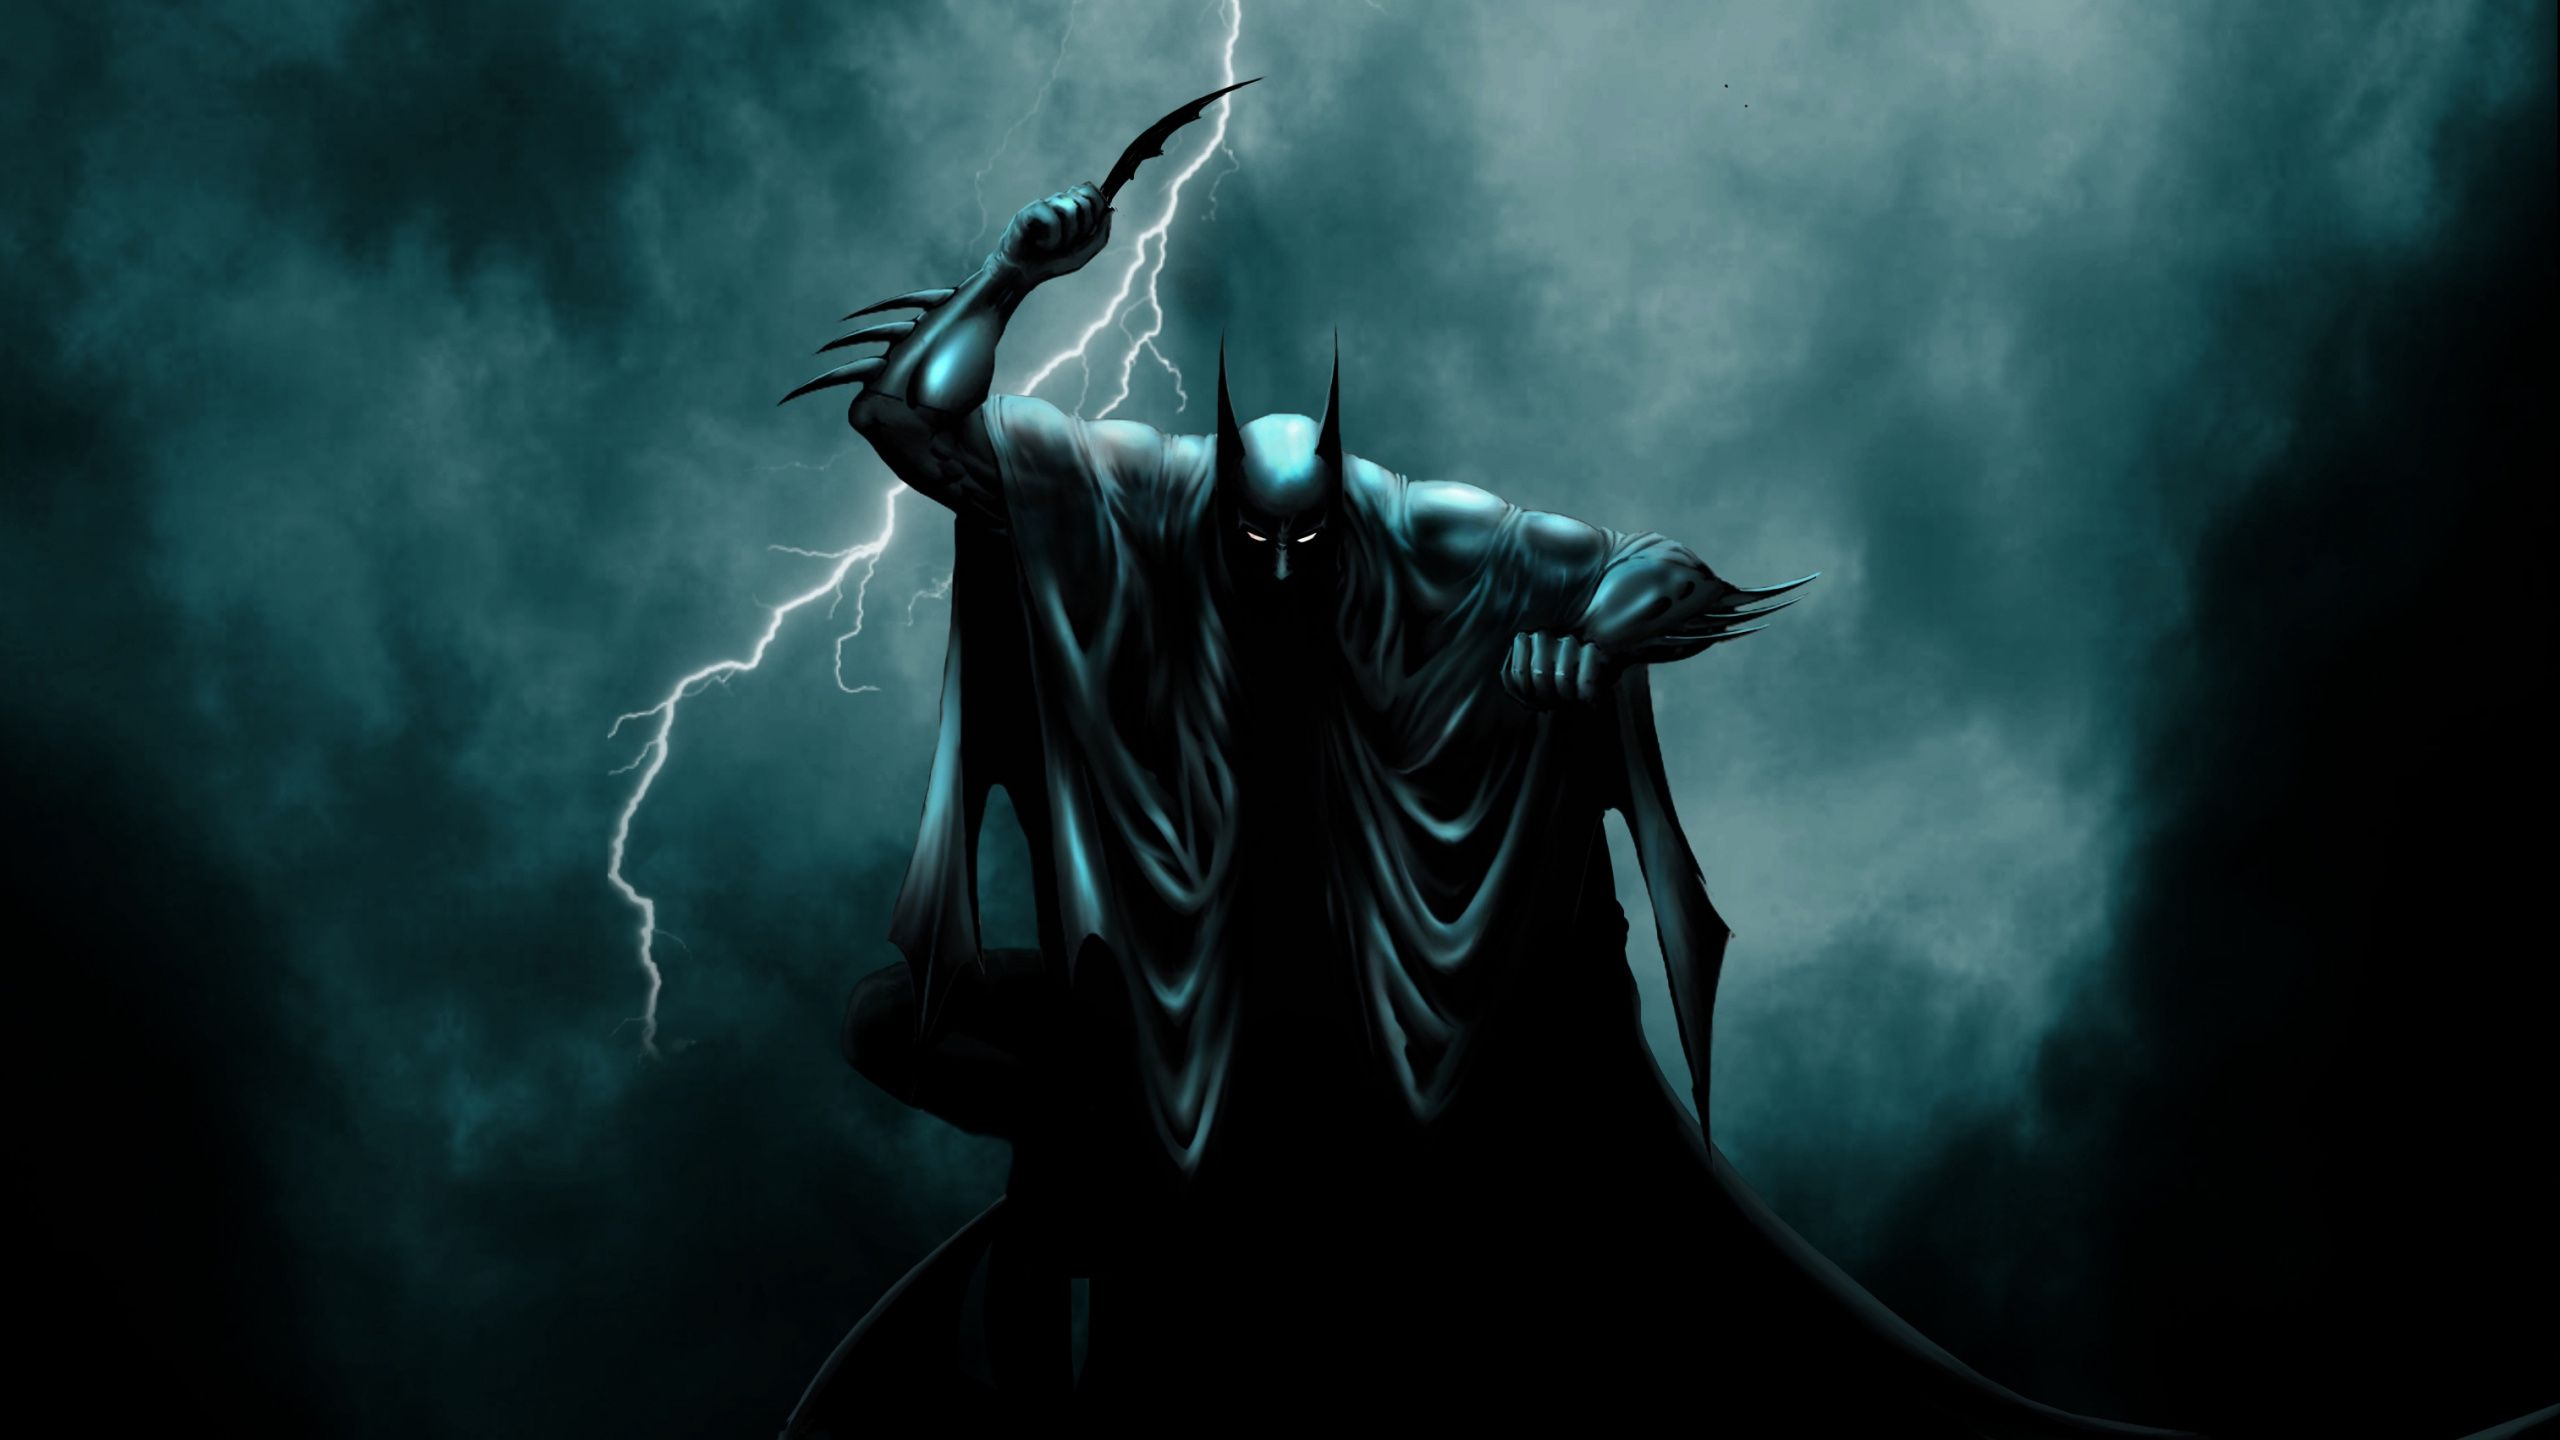 Download The dark knight, superhero, batman, art wallpaper